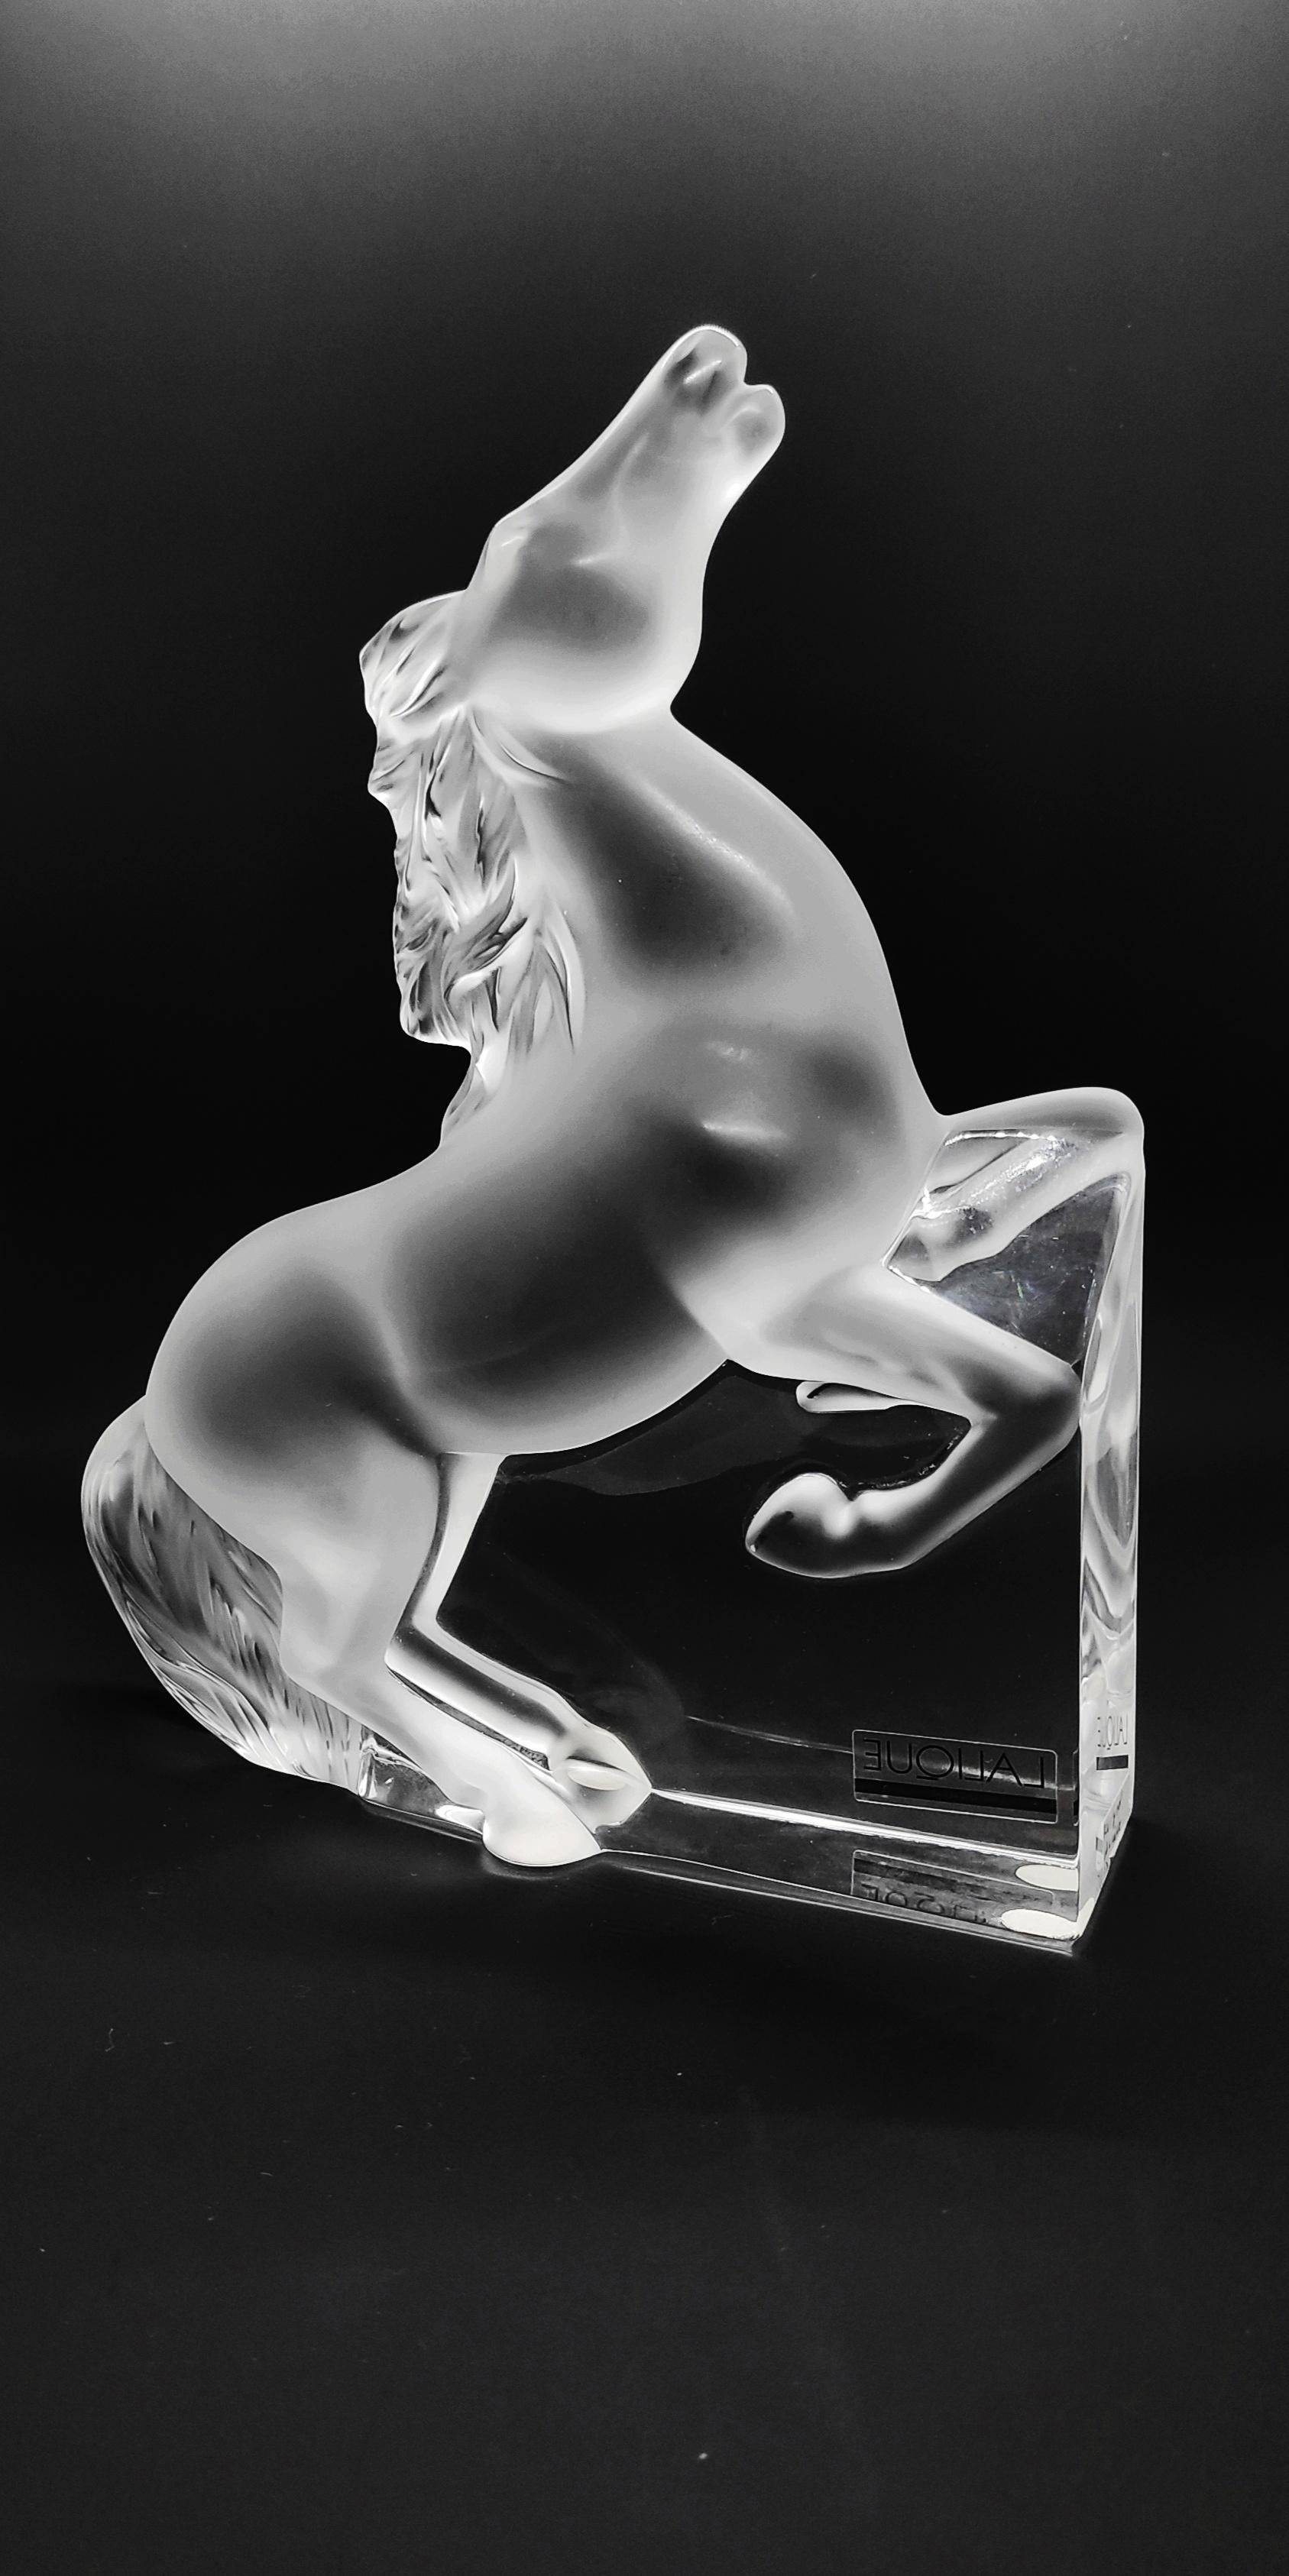 Kazak horse sculpture - Cheval Kazak - Lalique opaque and transparent crystal
Dimensions: H 22 cm, L 18 cm, P 5.6 cm.
Weight: 2.140 kg
Handcrafted in France.